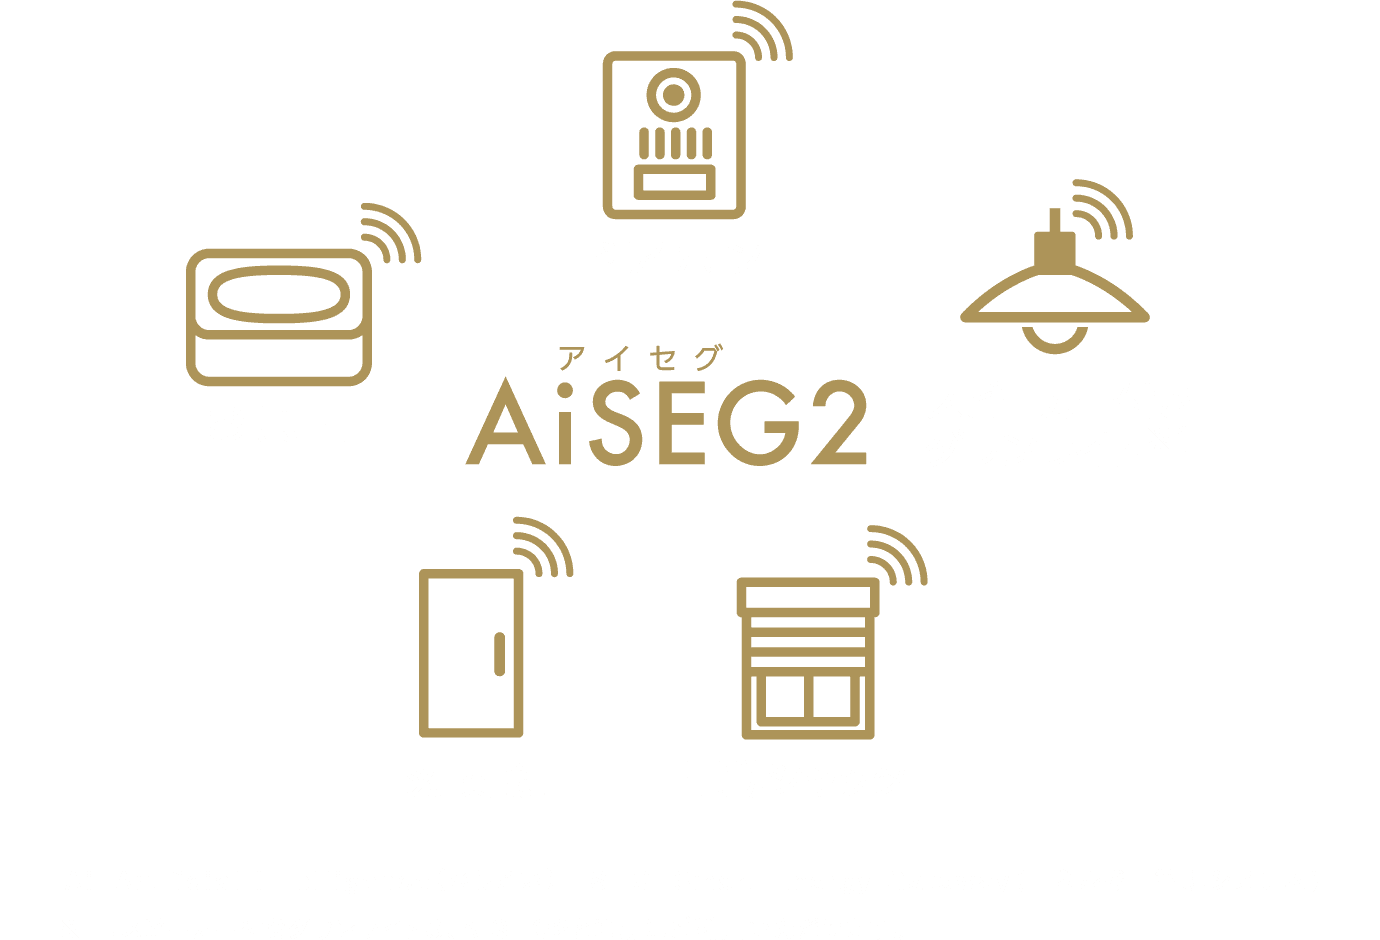 AiSEG2 Ai=Artificial Intelligence（かしこい） SEG=Smart Energy Gateway（エネルギー管理システム）